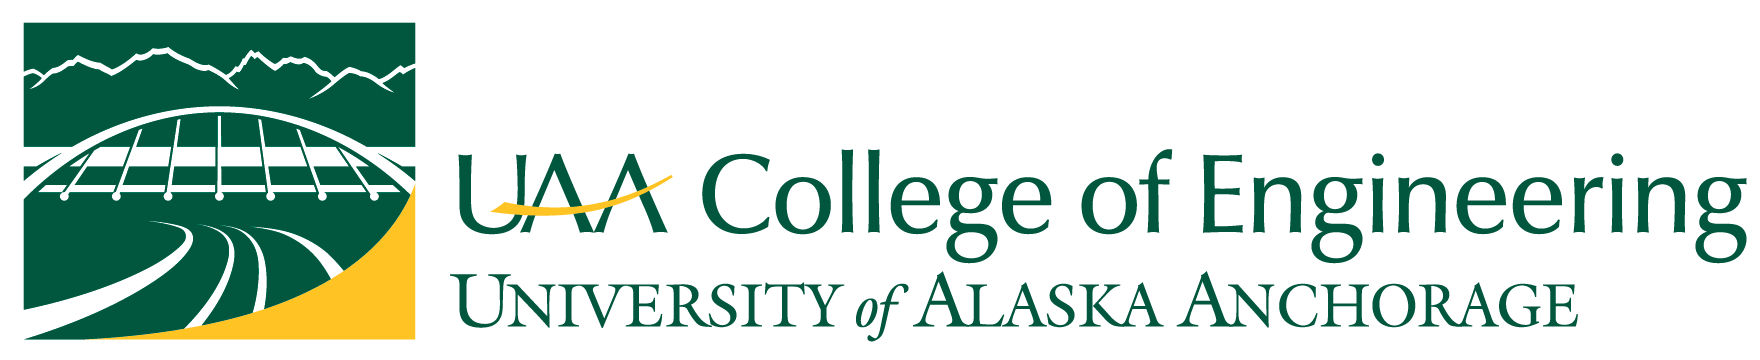 UAA College of Engineering Logo